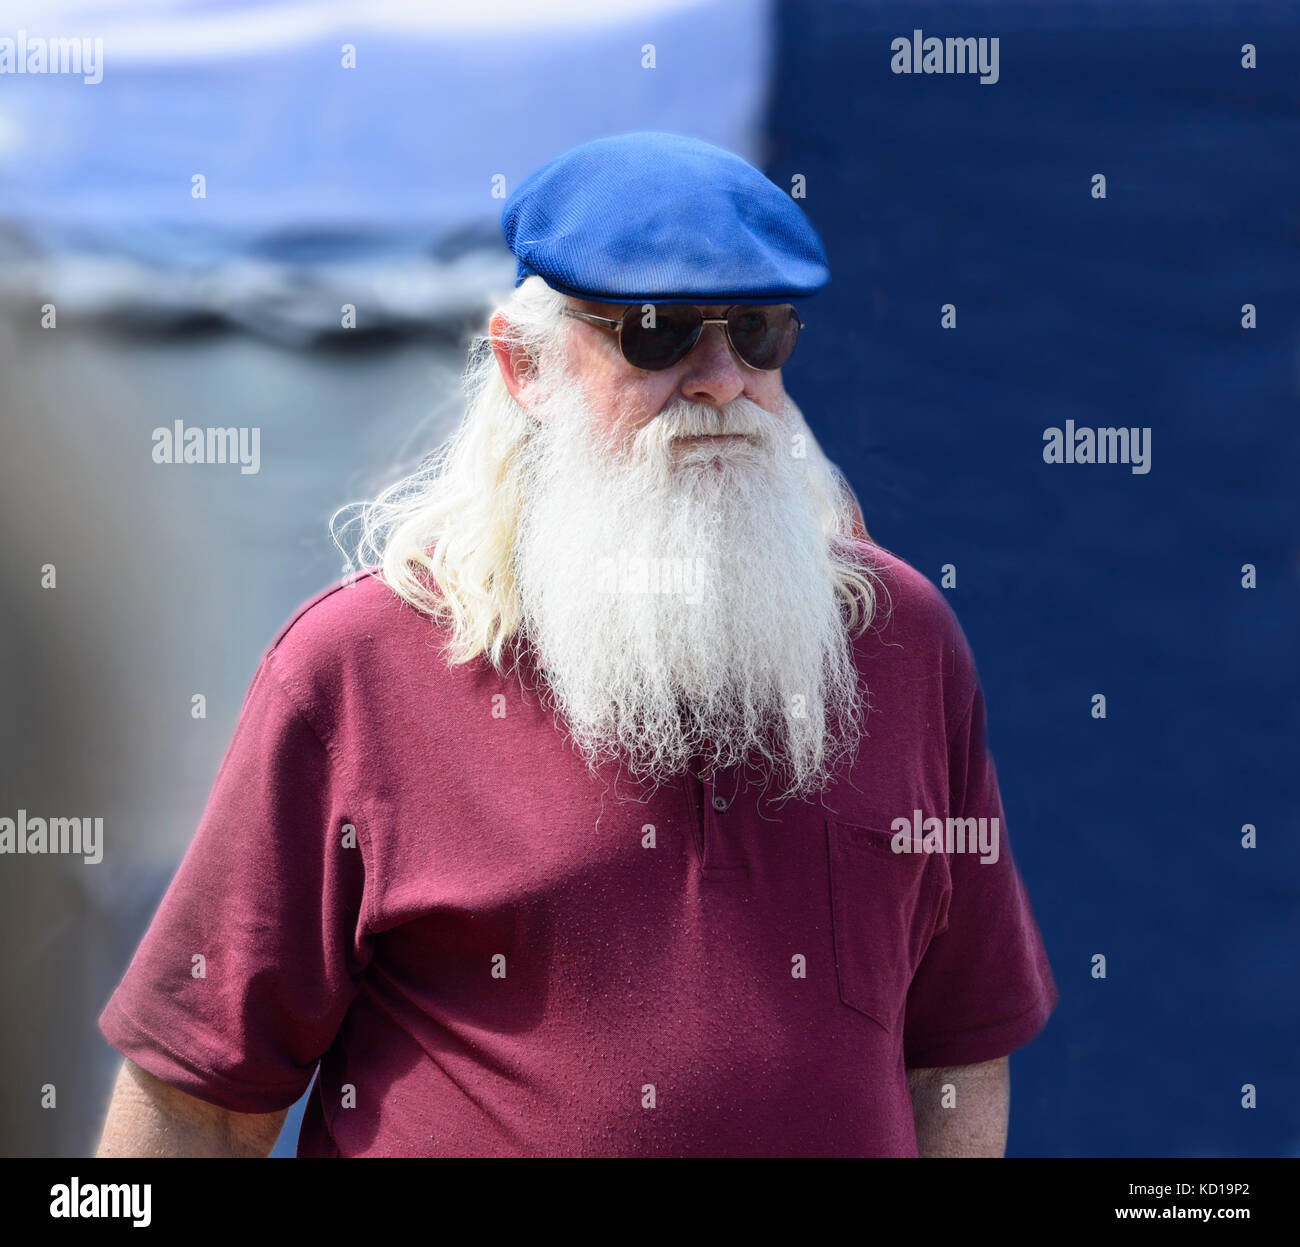 Portrait of an elderly man wearing a beret, sunglasses and a long white beard Stock Photo